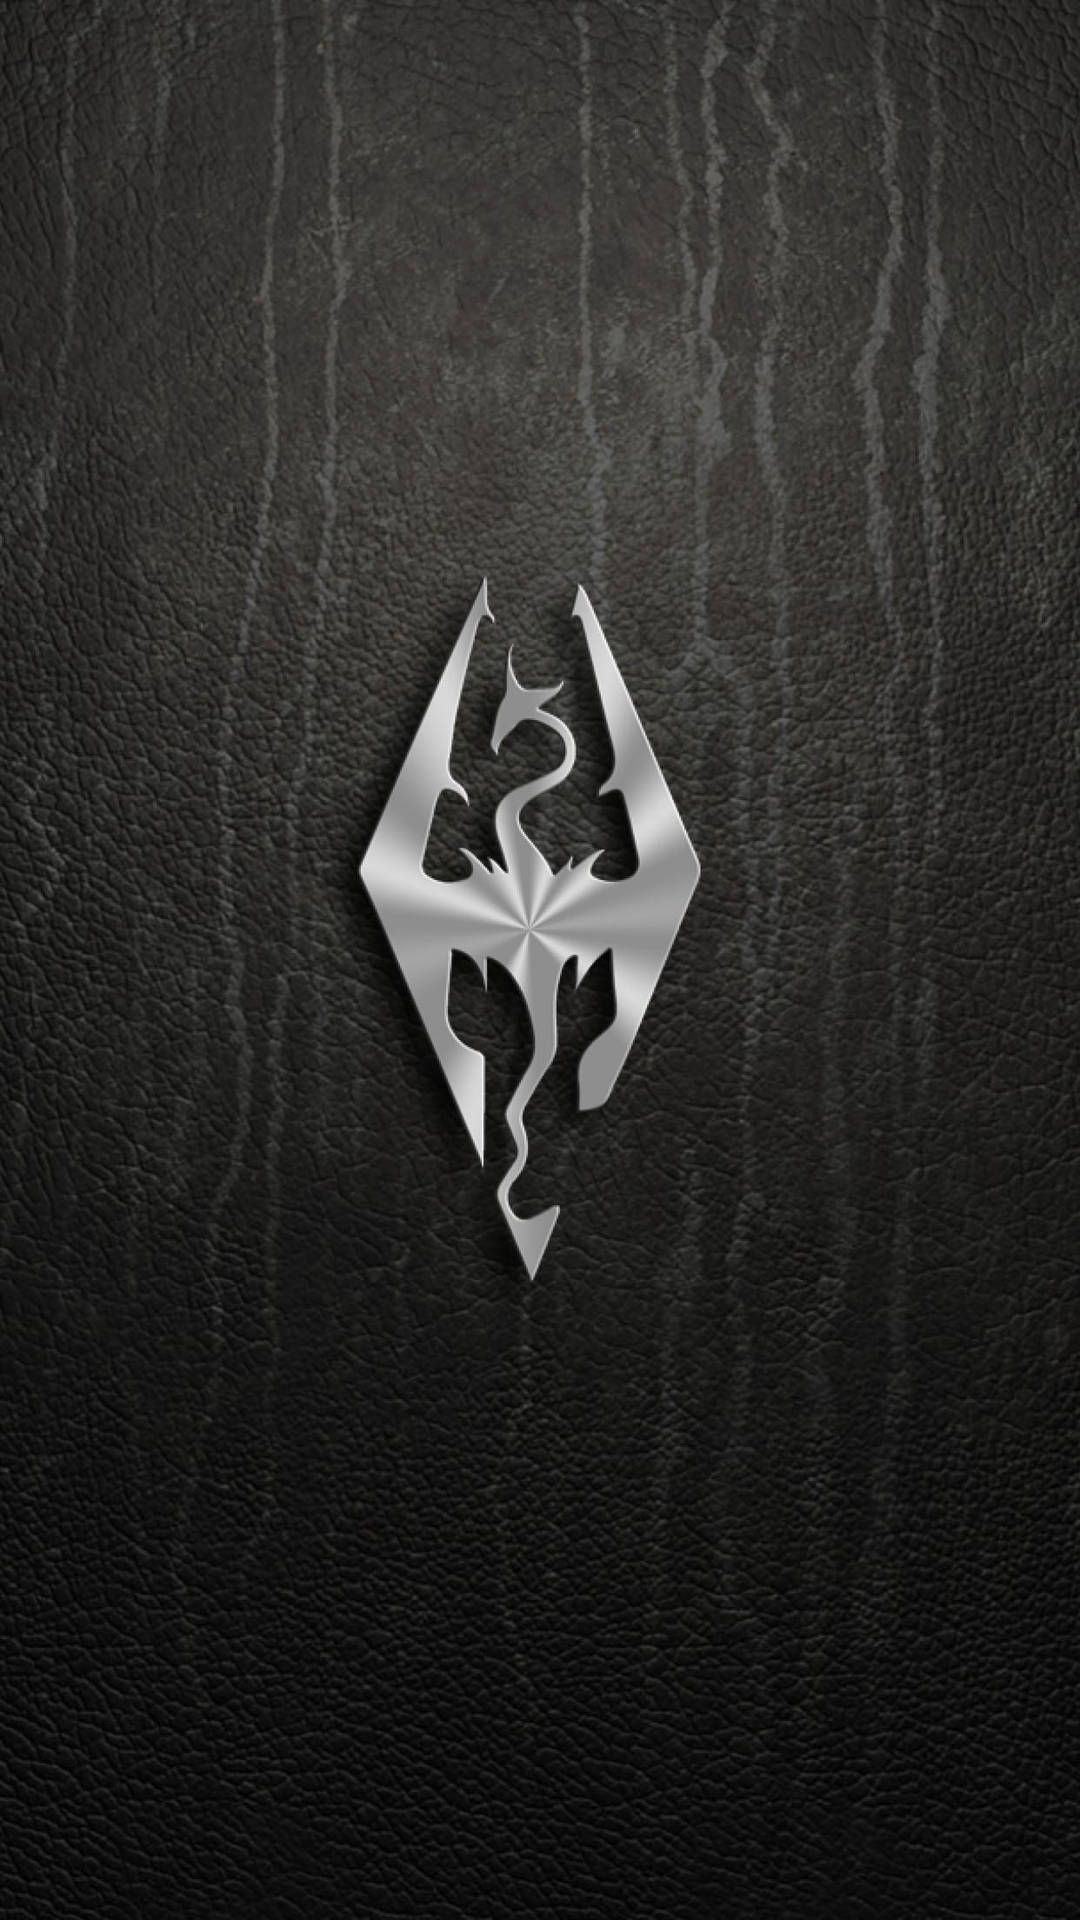 Silver Skyrim iPhone Emblem Wallpaper